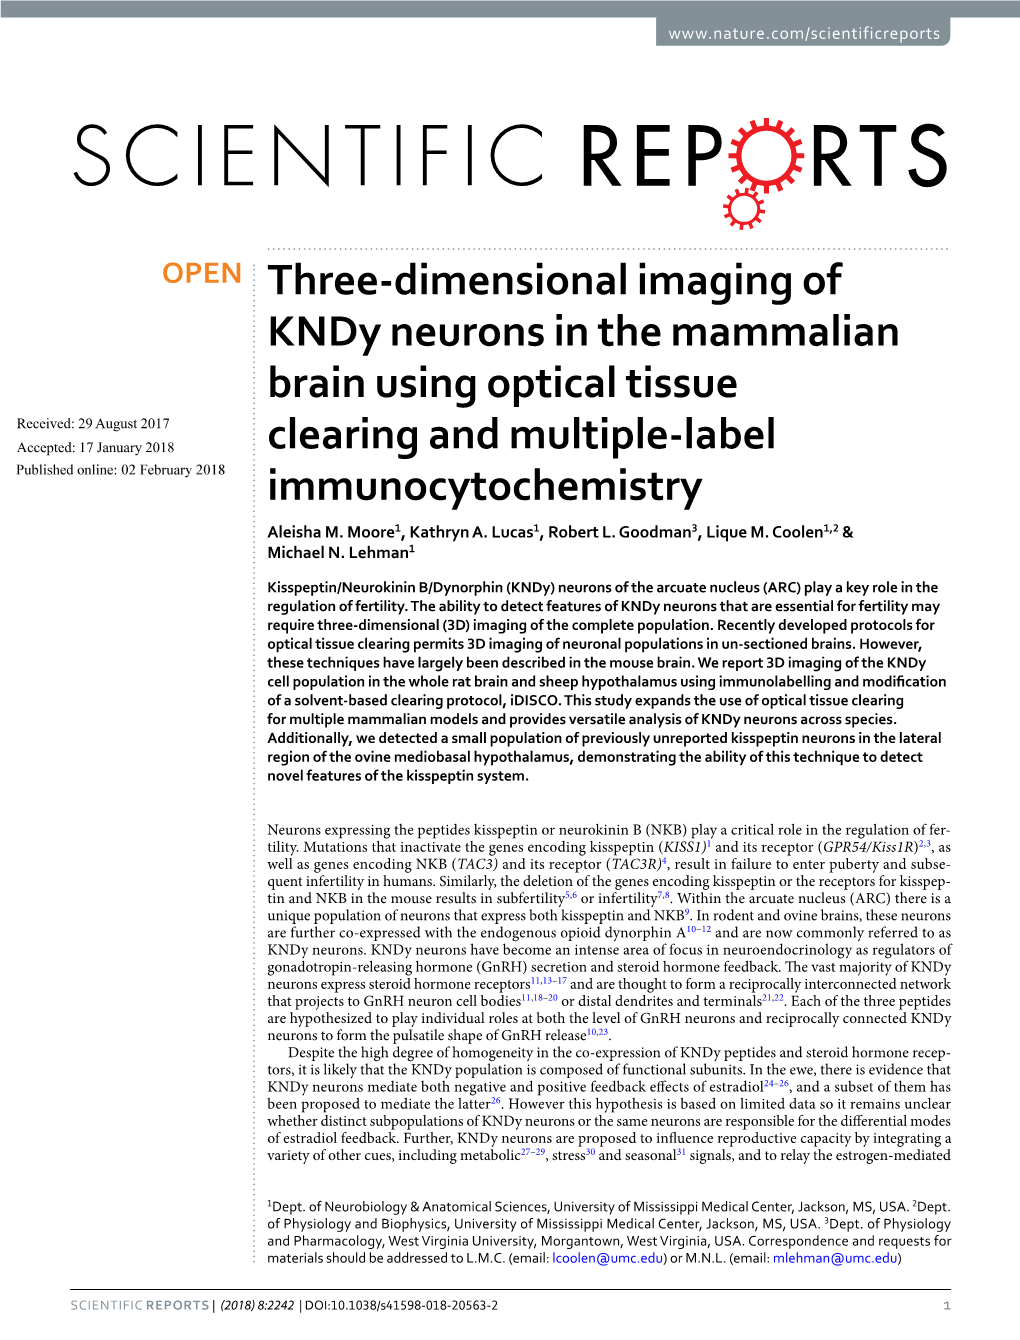 Three-Dimensional Imaging of Kndy Neurons in the Mammalian Brain